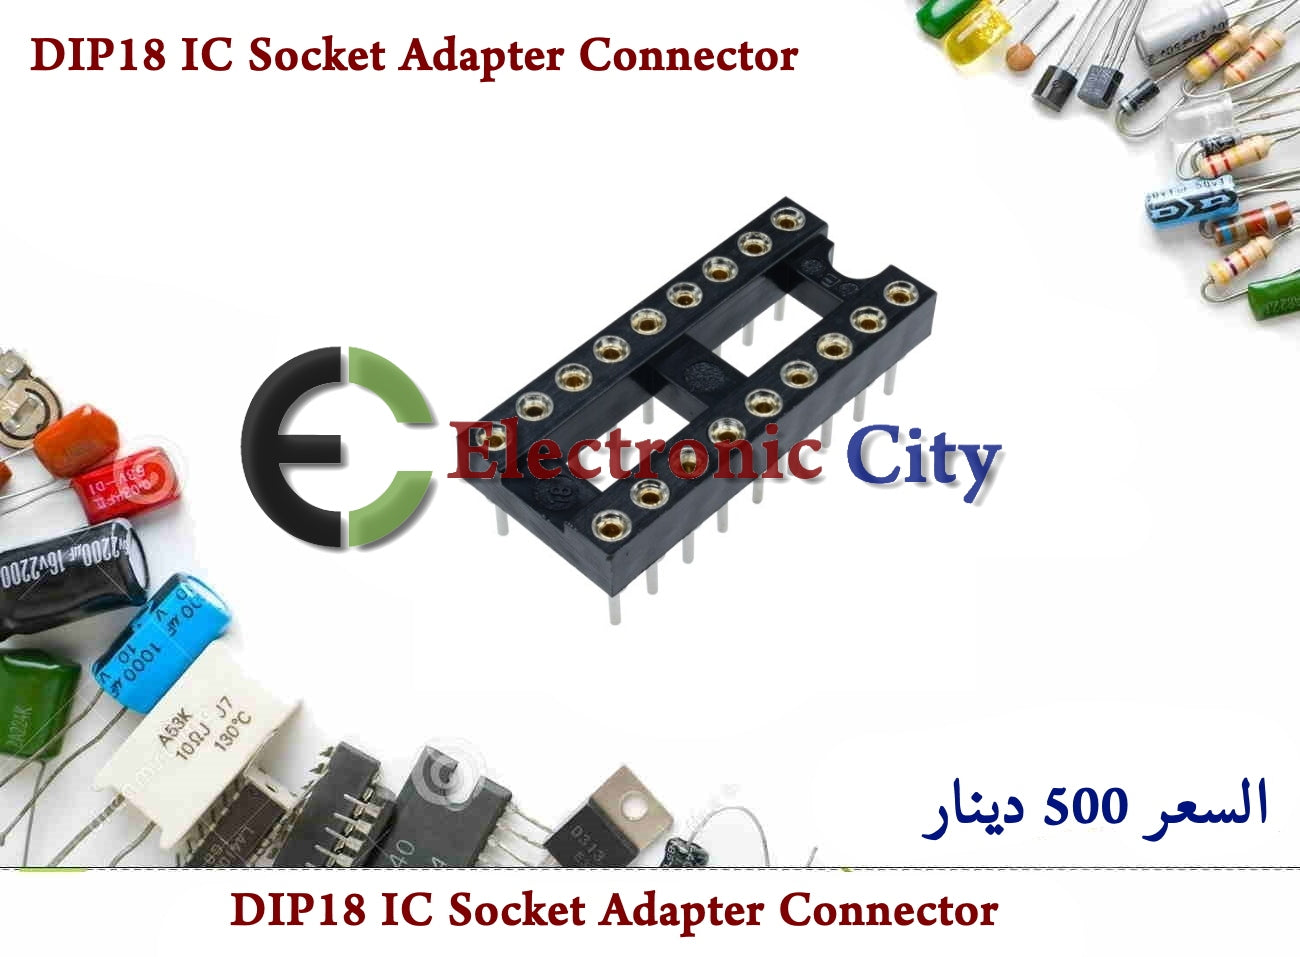 DIP18 IC Socket Adapter Connector